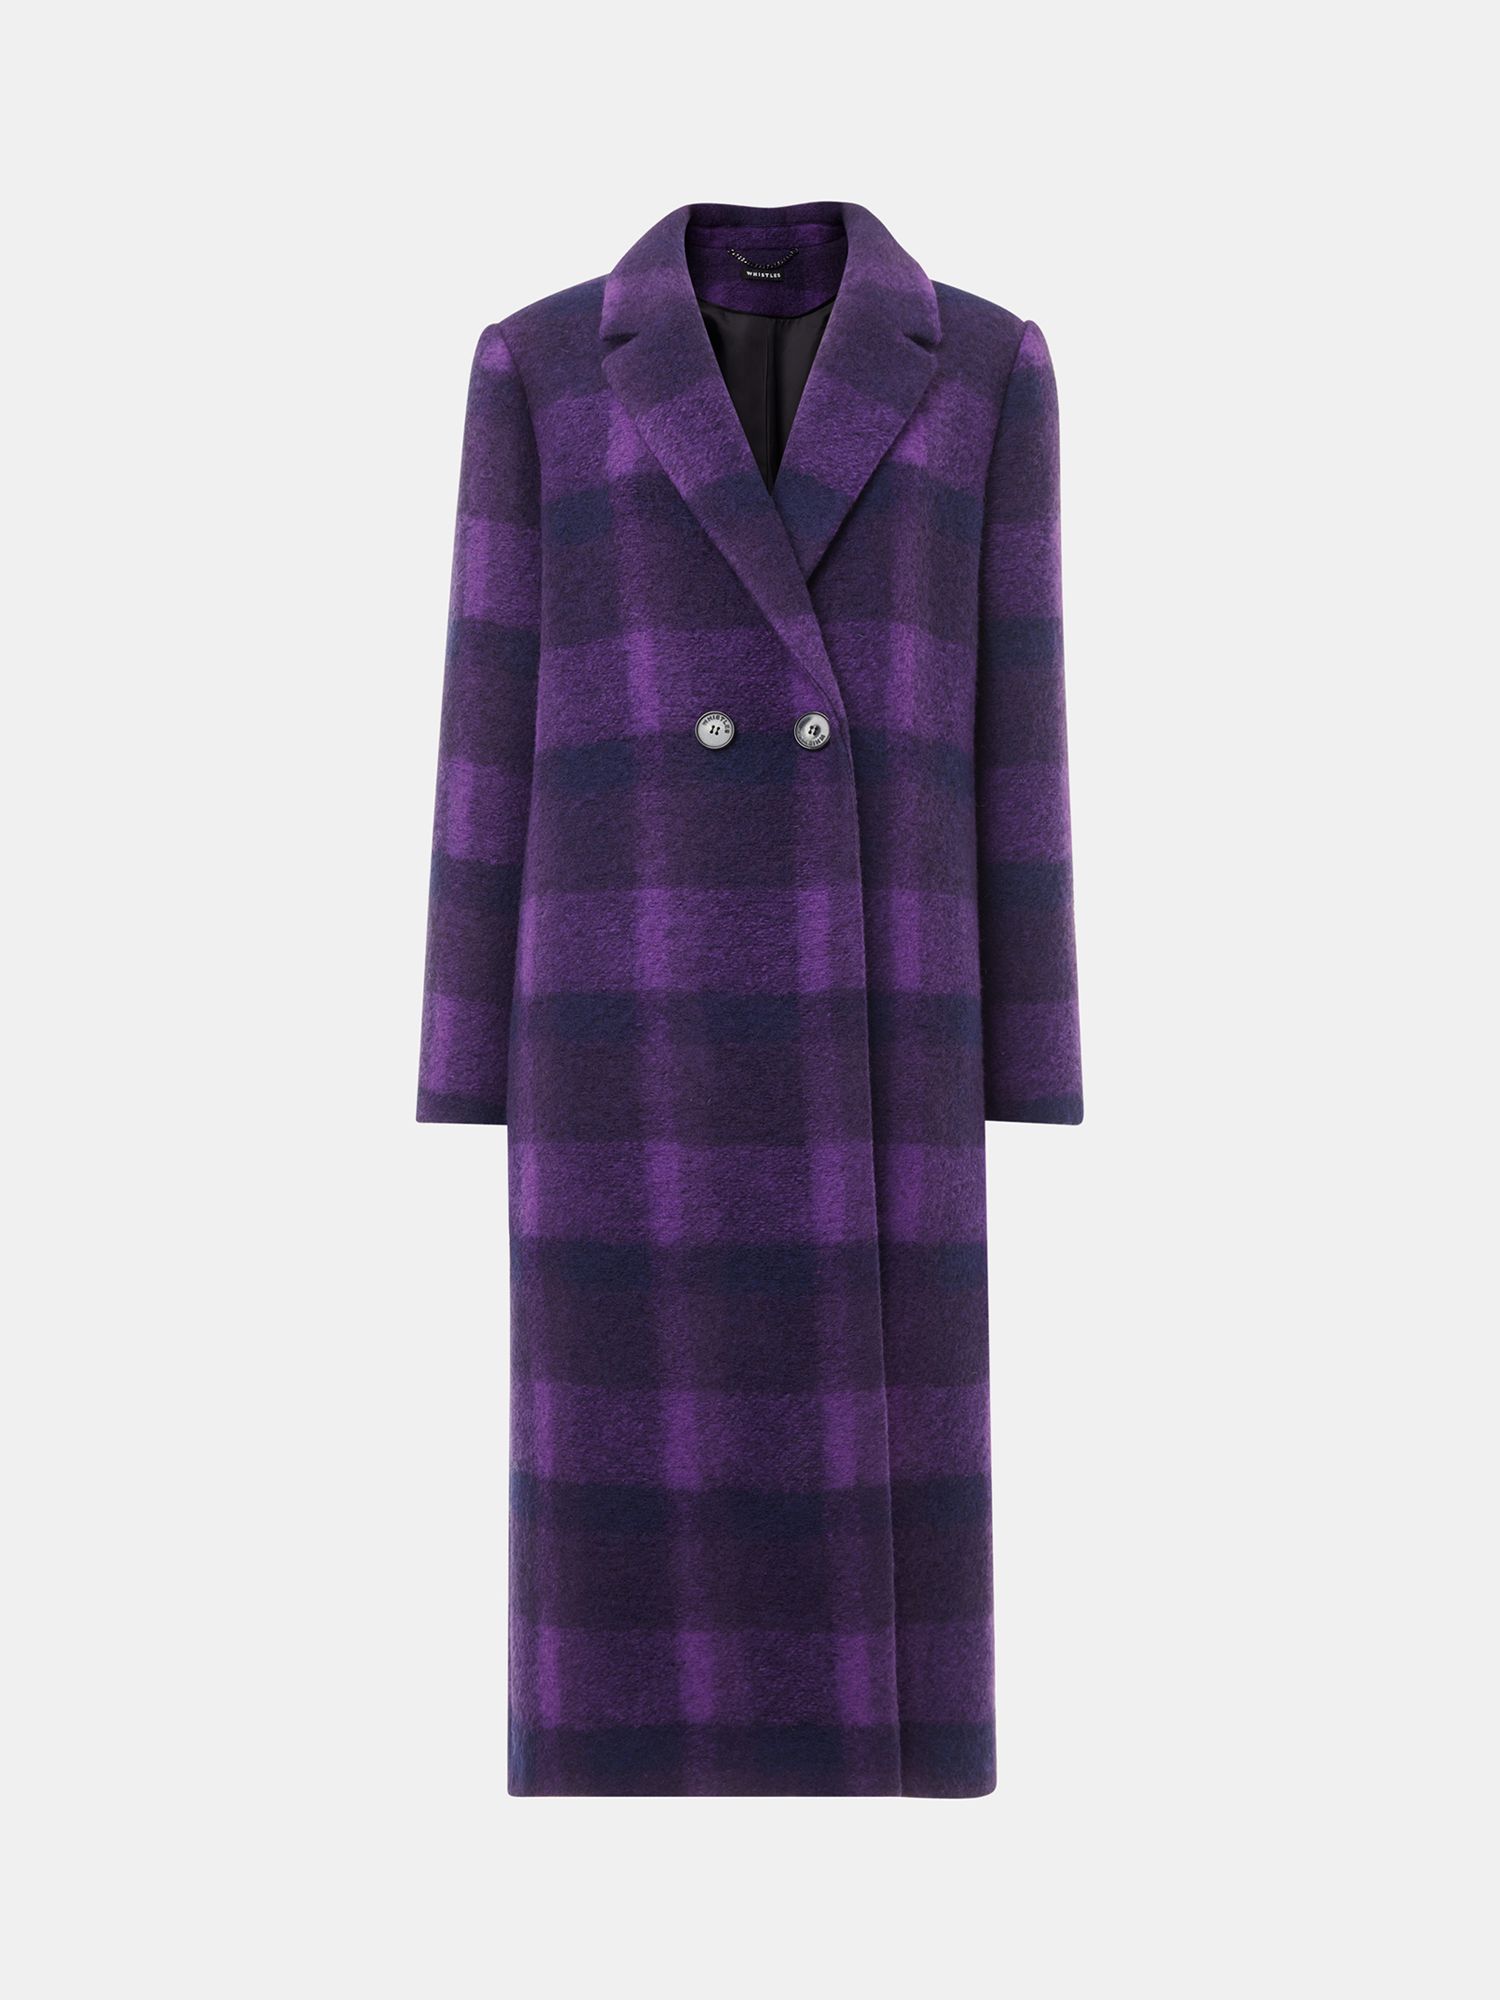 Whistles Camila Wool Blend Check Coat, Purple at John Lewis & Partners